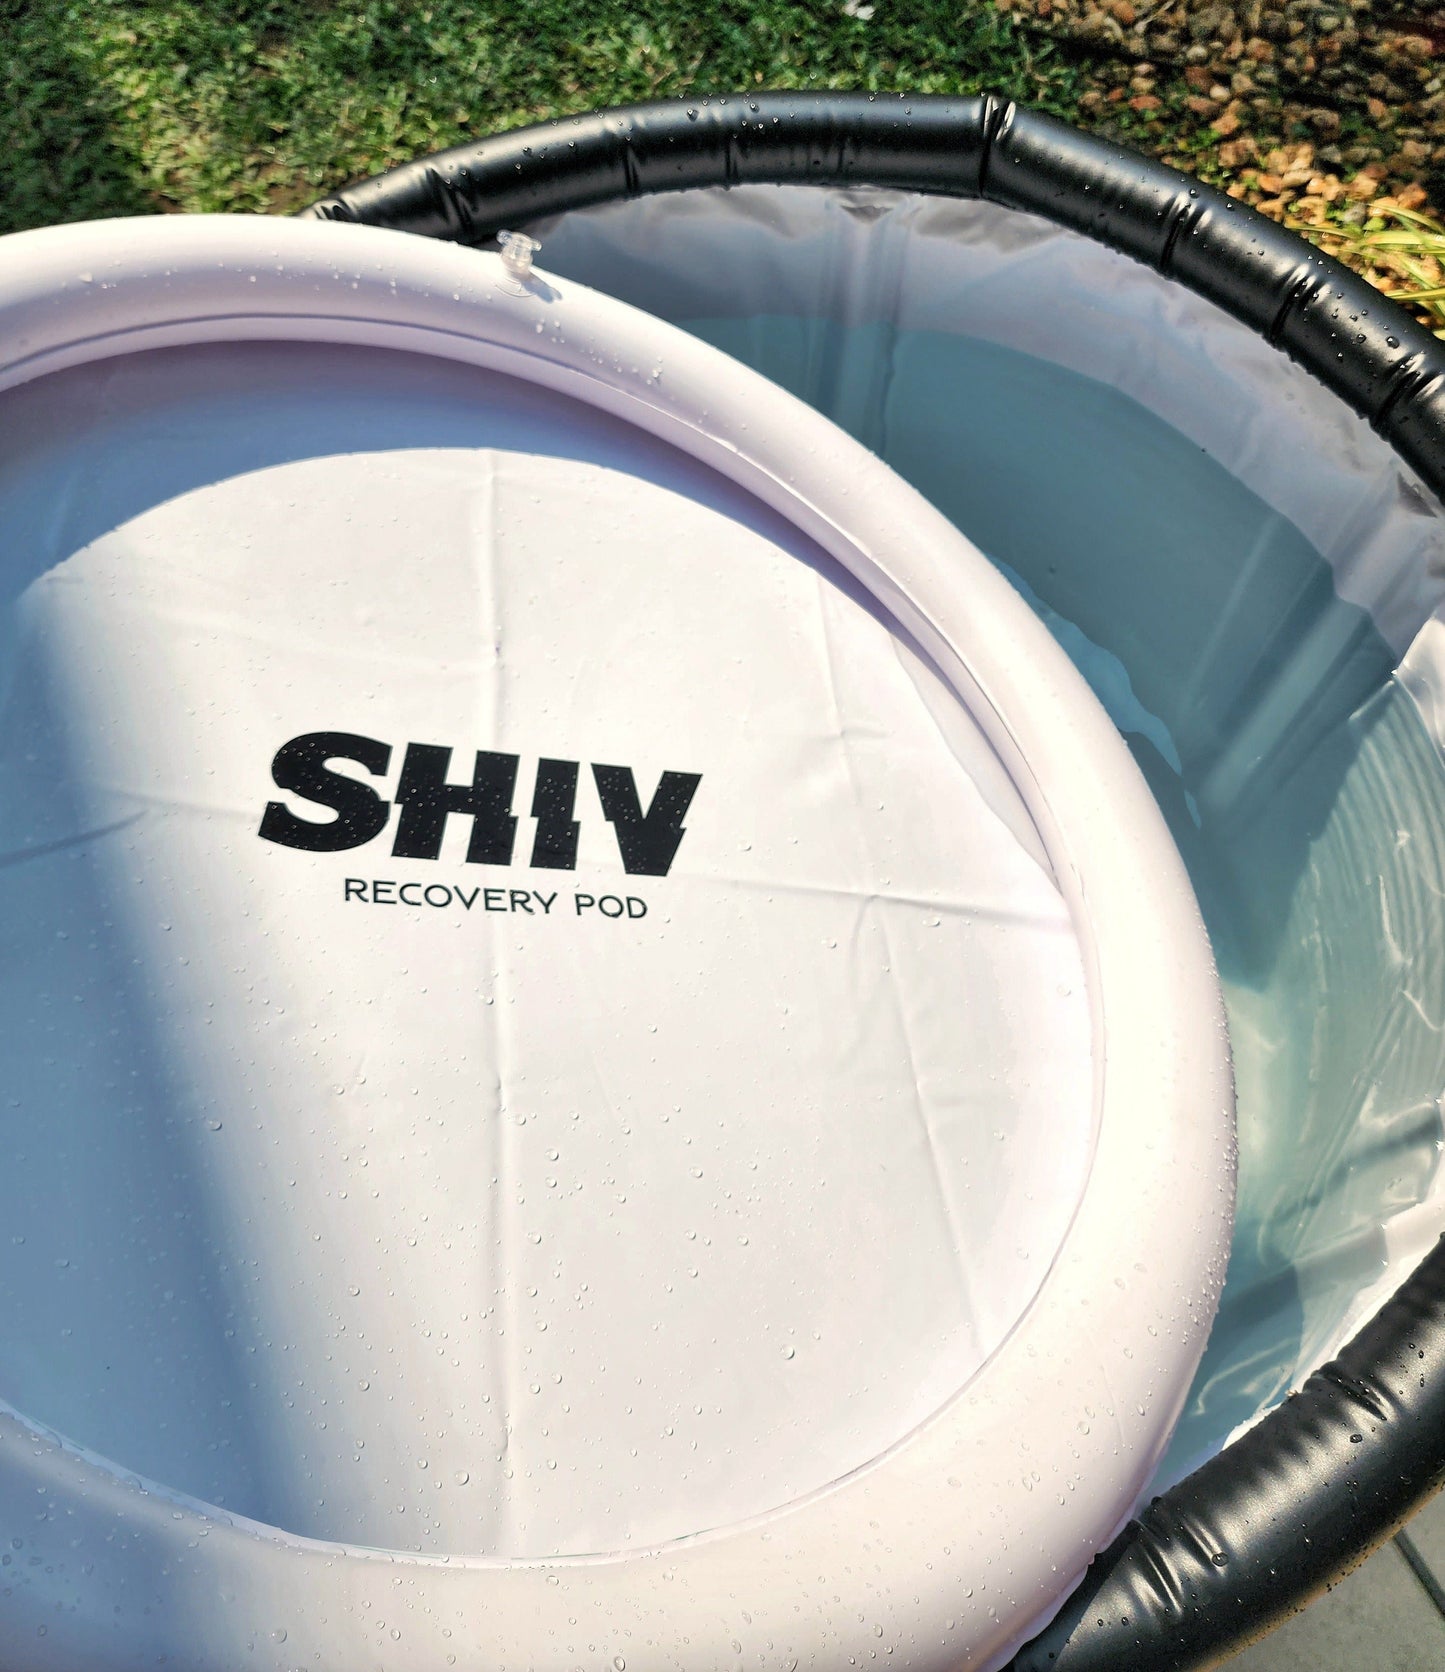 SHIV Recovery Pod Ice Bath